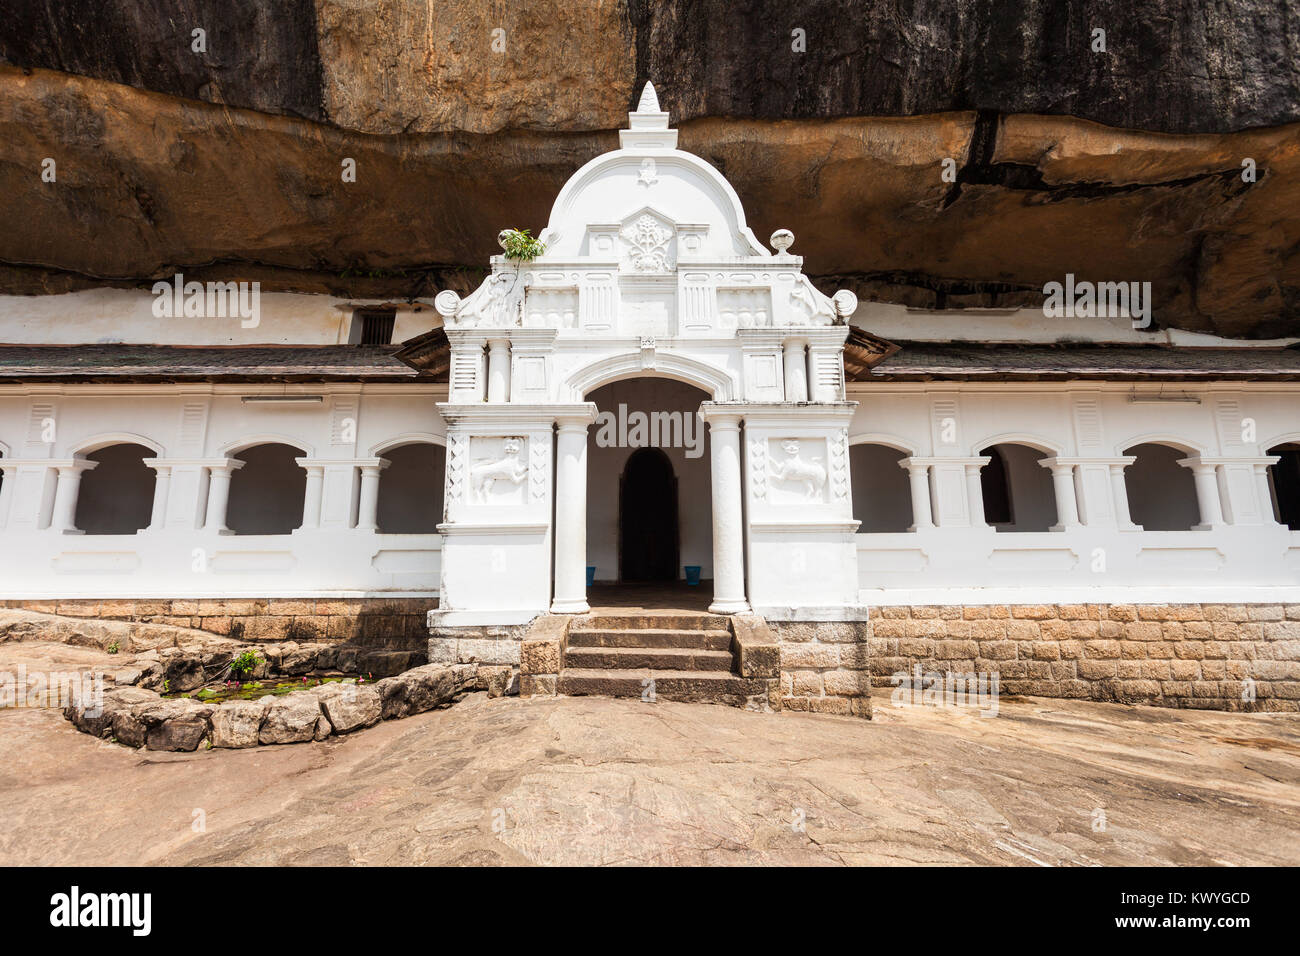 Dambulla Cave Temple or Golden Temple of Dambulla. Cave Temple is a World Heritage Site near Dambulla city, Sri Lanka. Stock Photo